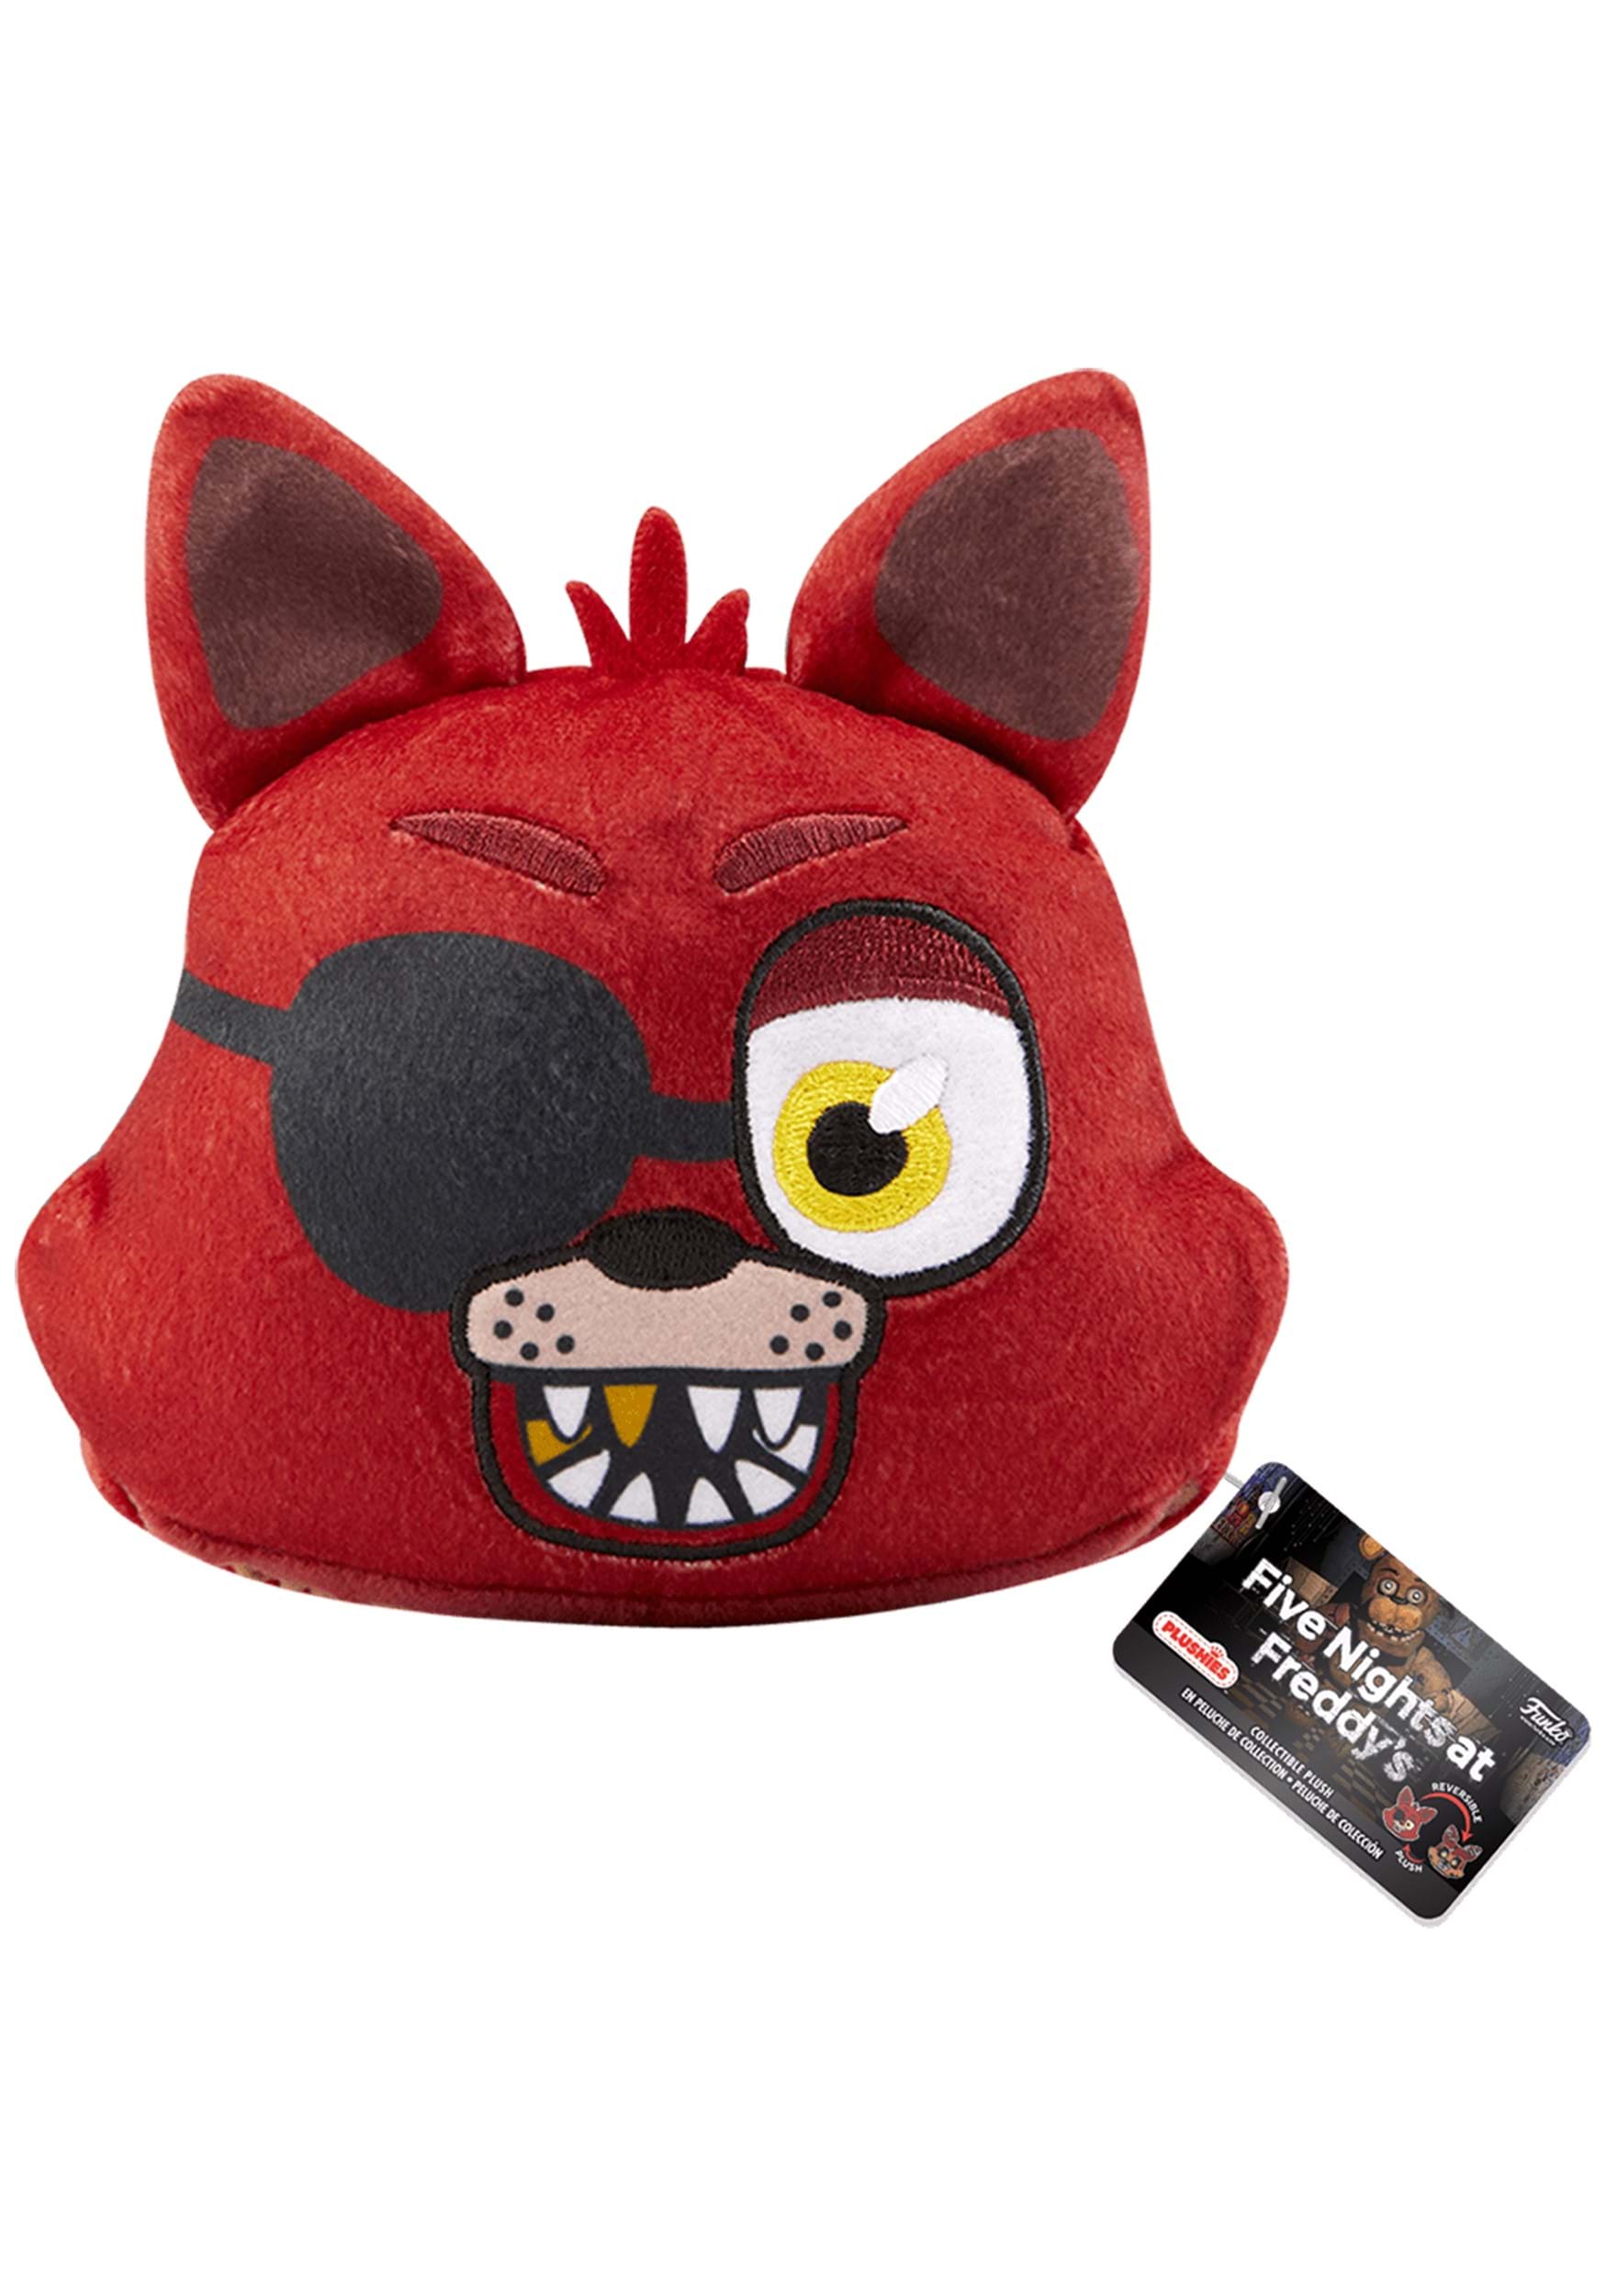 Funko Plush: Five Nights at Freddy's Foxy 4-Inch Reversible Head